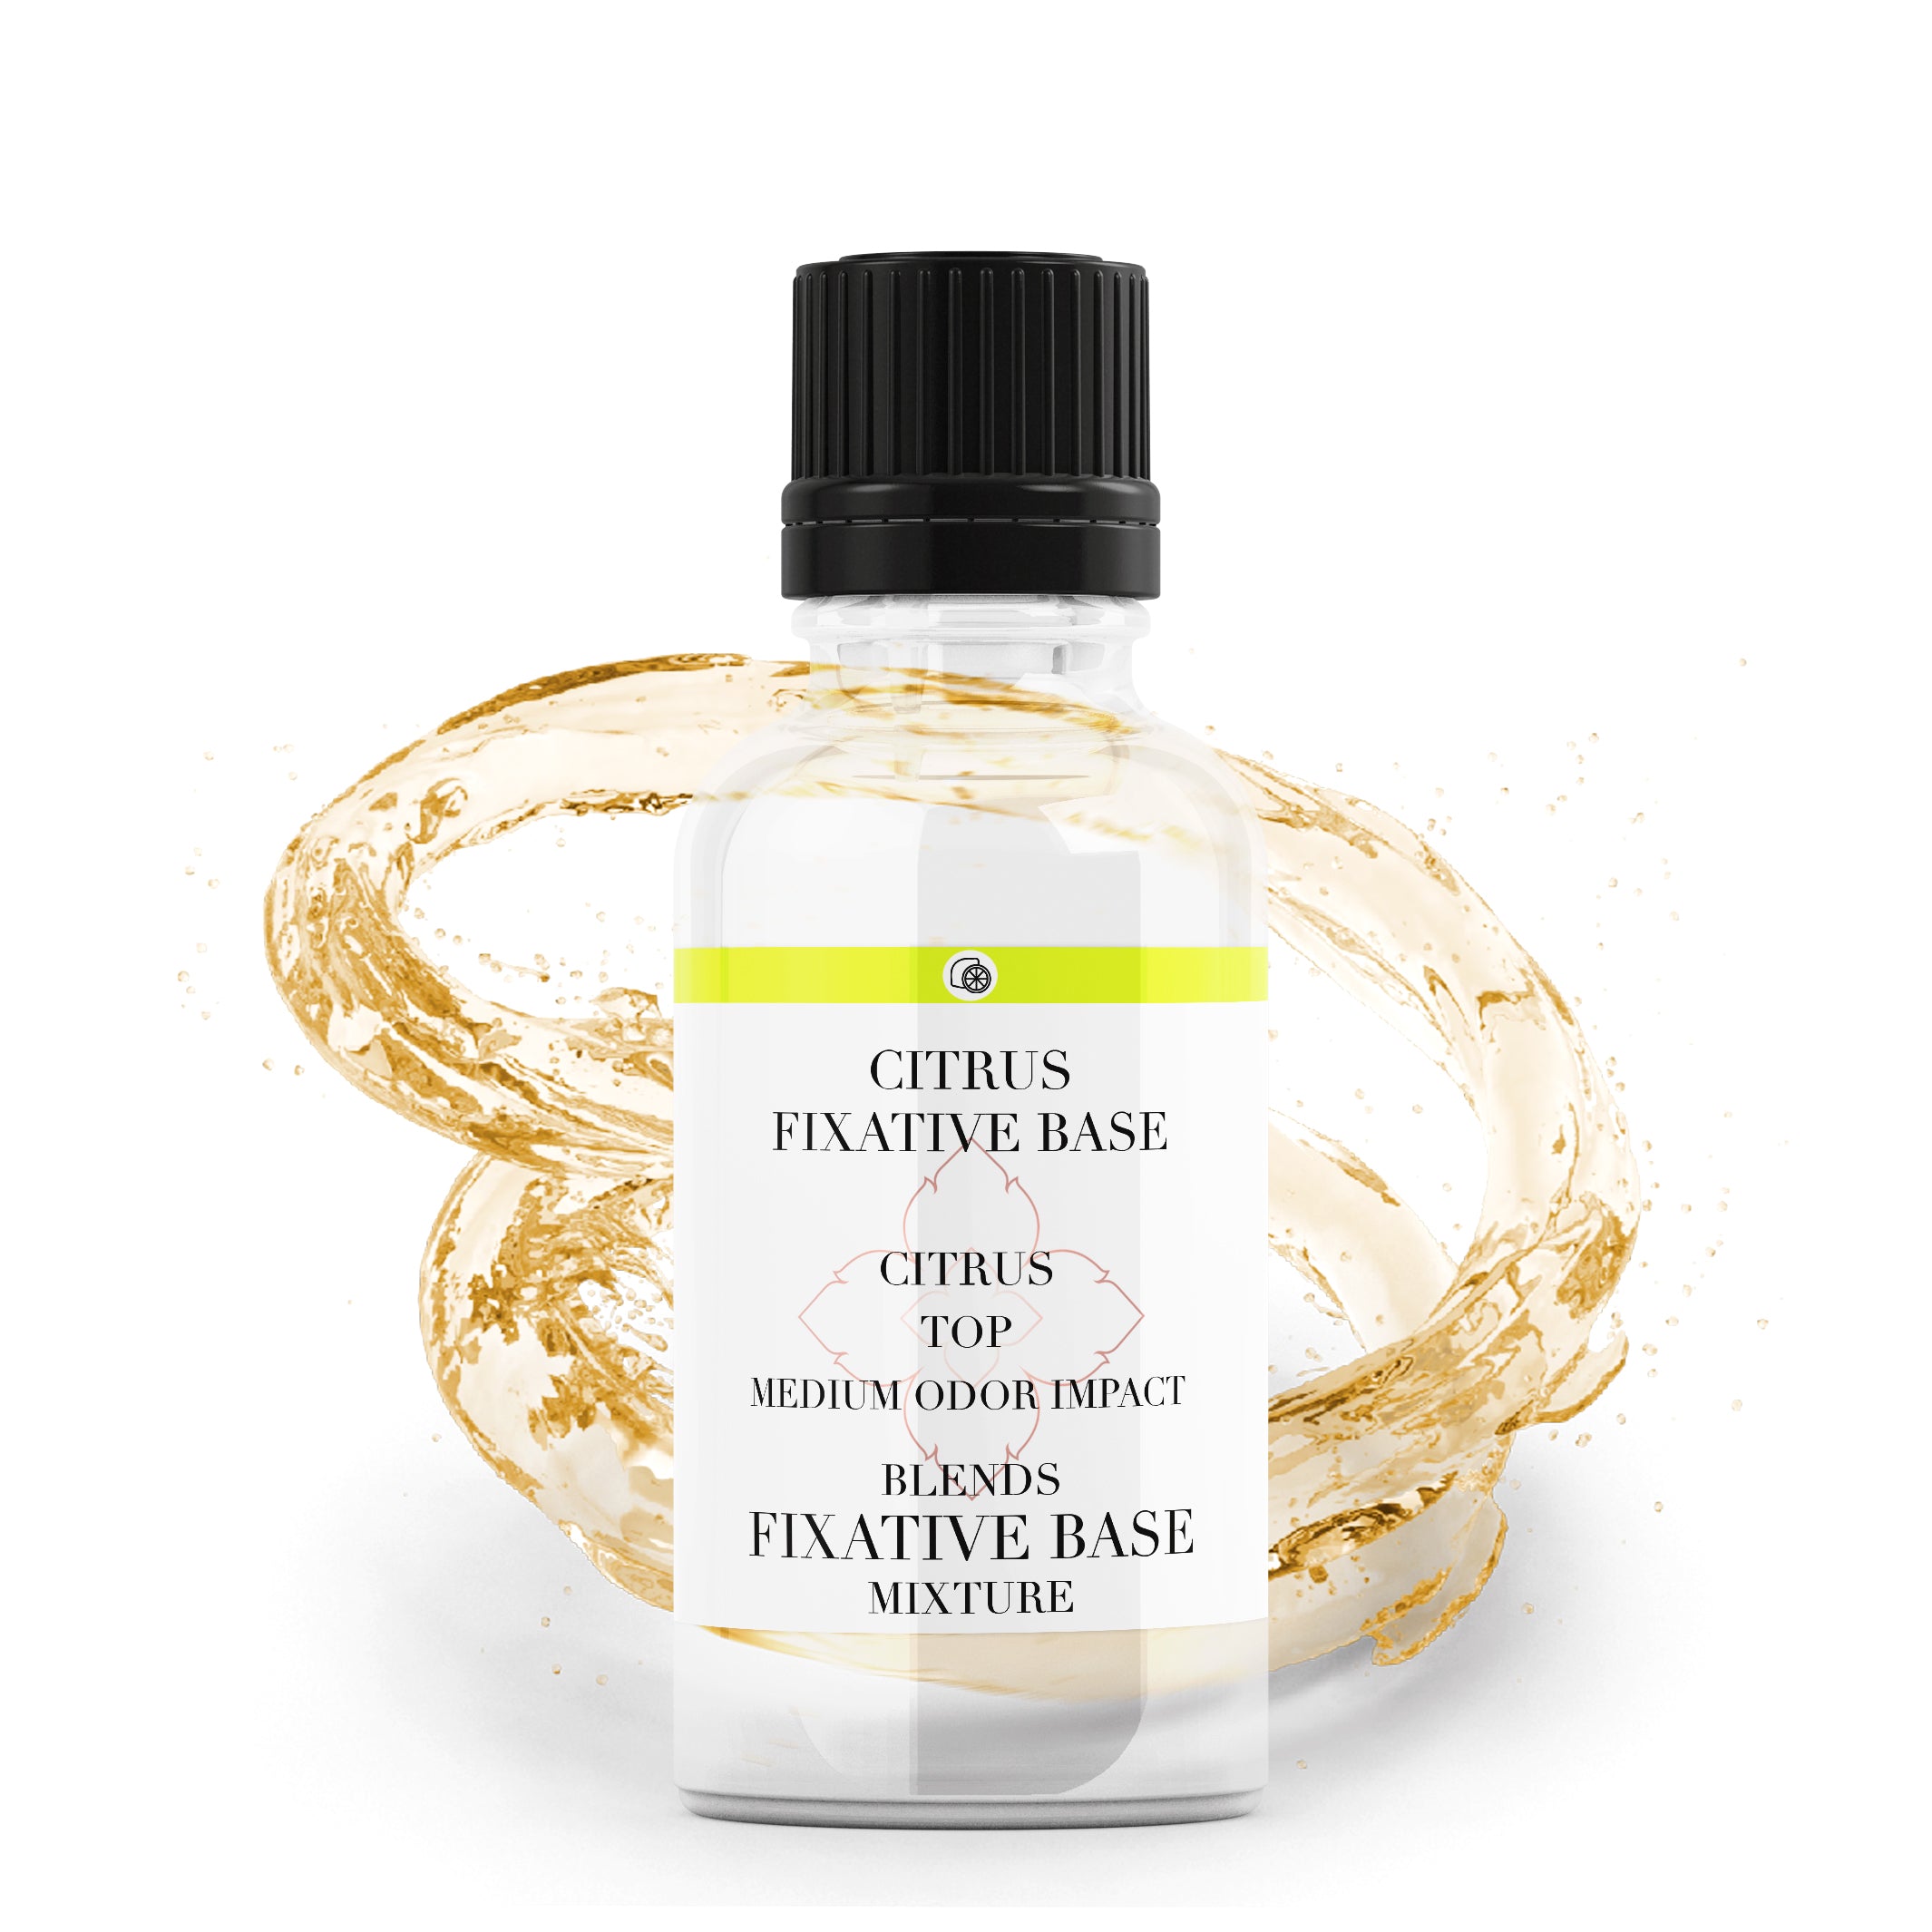 CITRUS FIXATIVE BASE – Creating Perfume